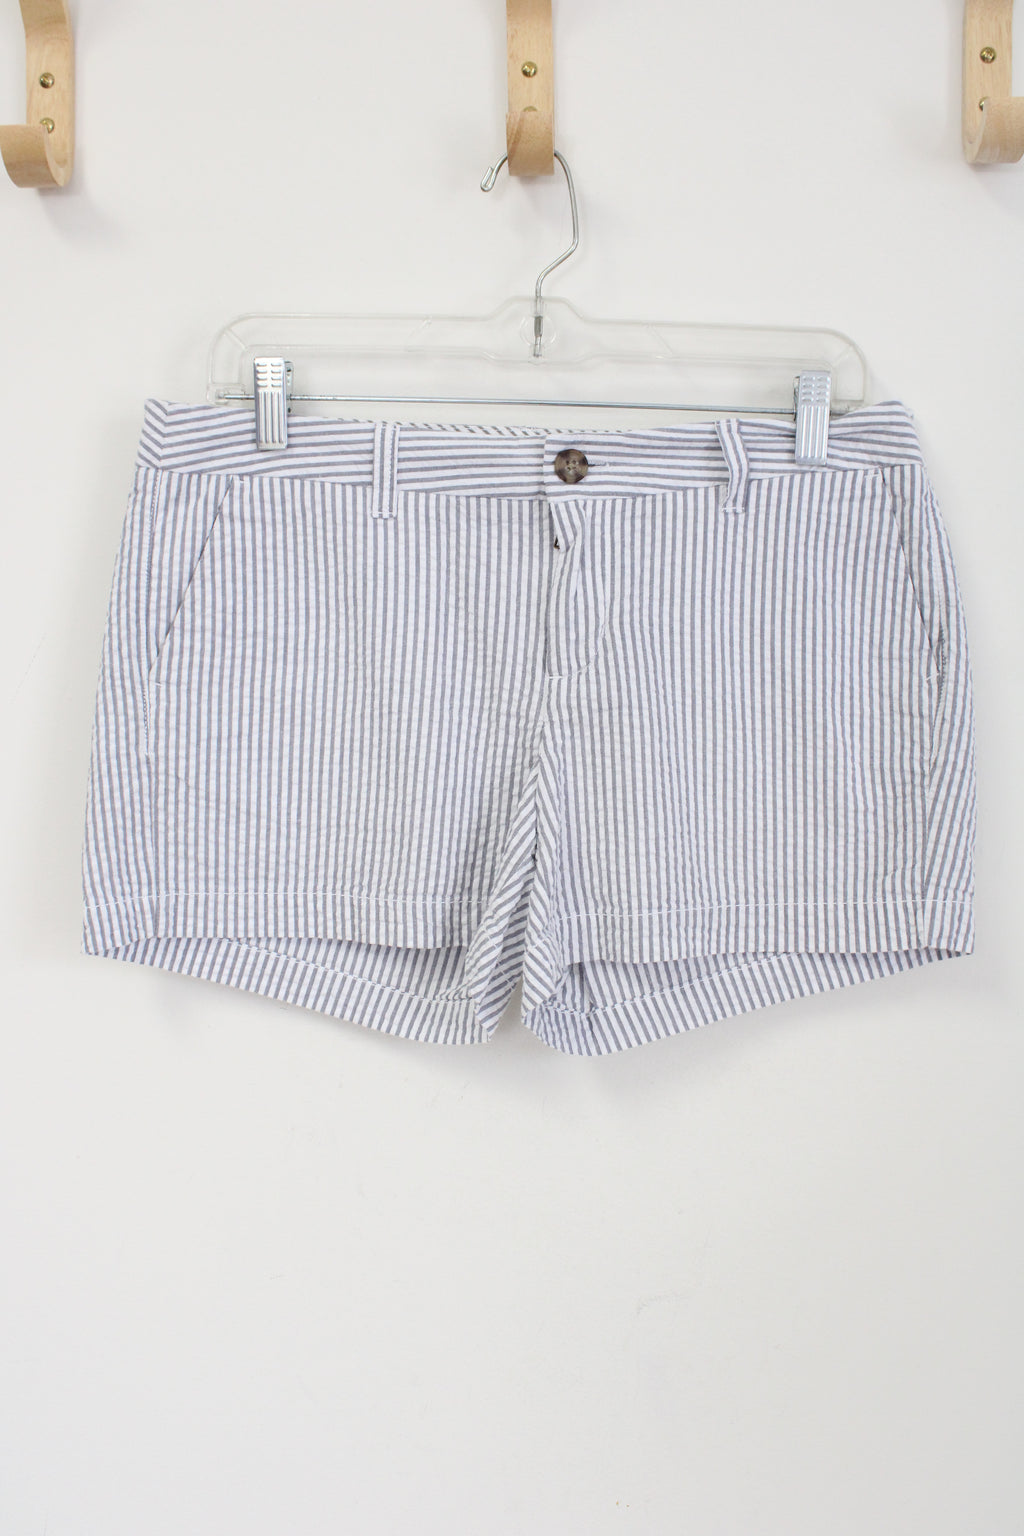 Merona Gray White Striped Cotton Shorts | 6